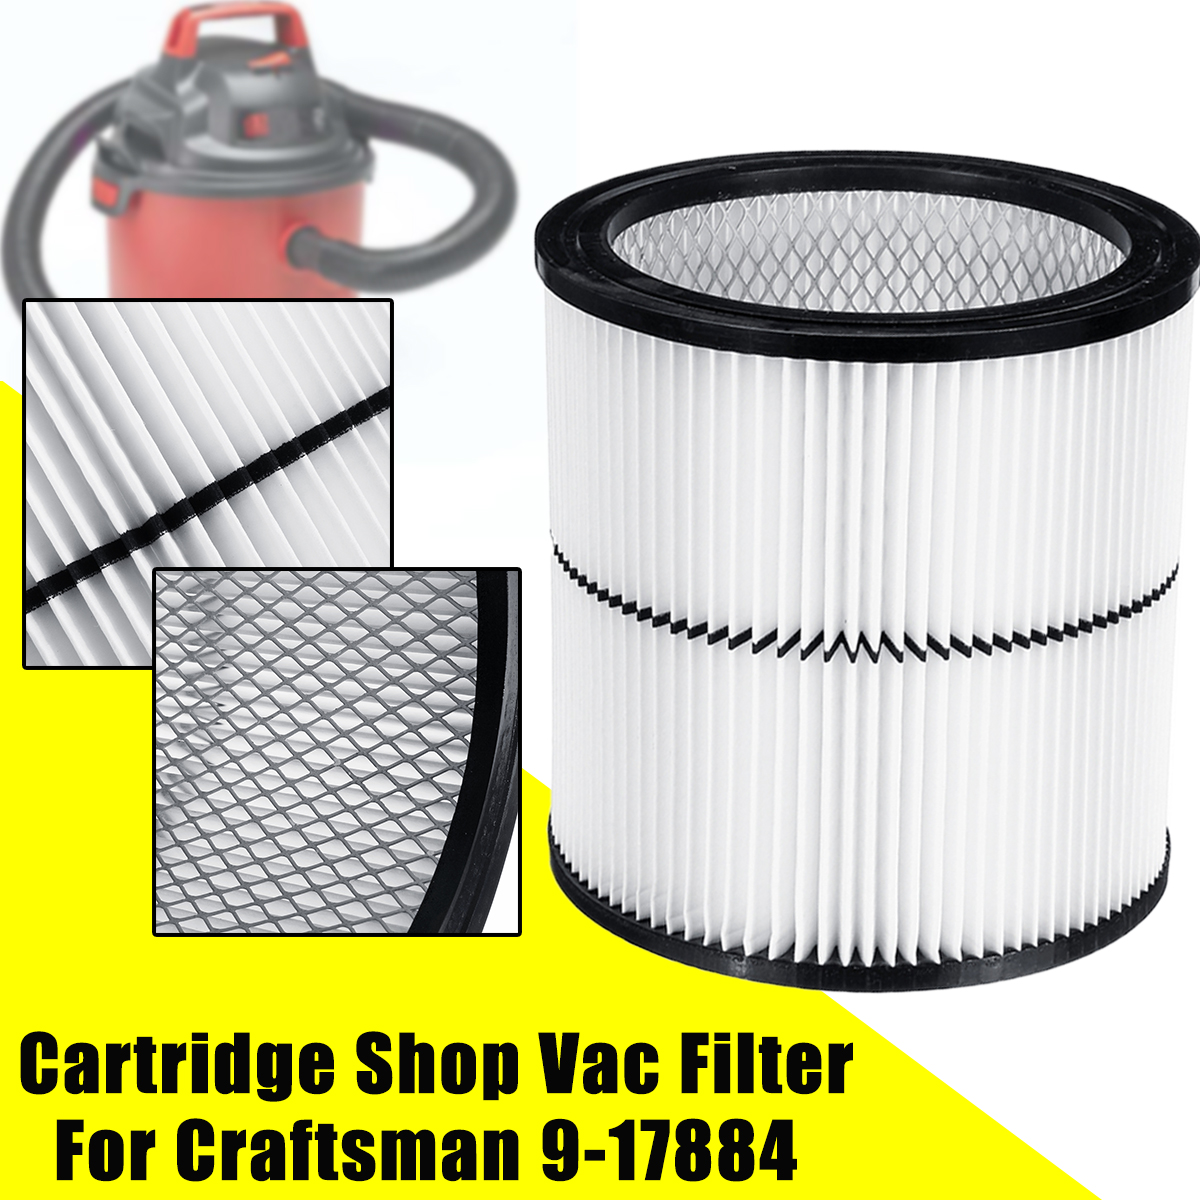 Cartridge-Shop-Vac-Filter-For-Craftsman-9-17884-6-8-12-16-Gallon-Vacuum-02-2004-1510983-1